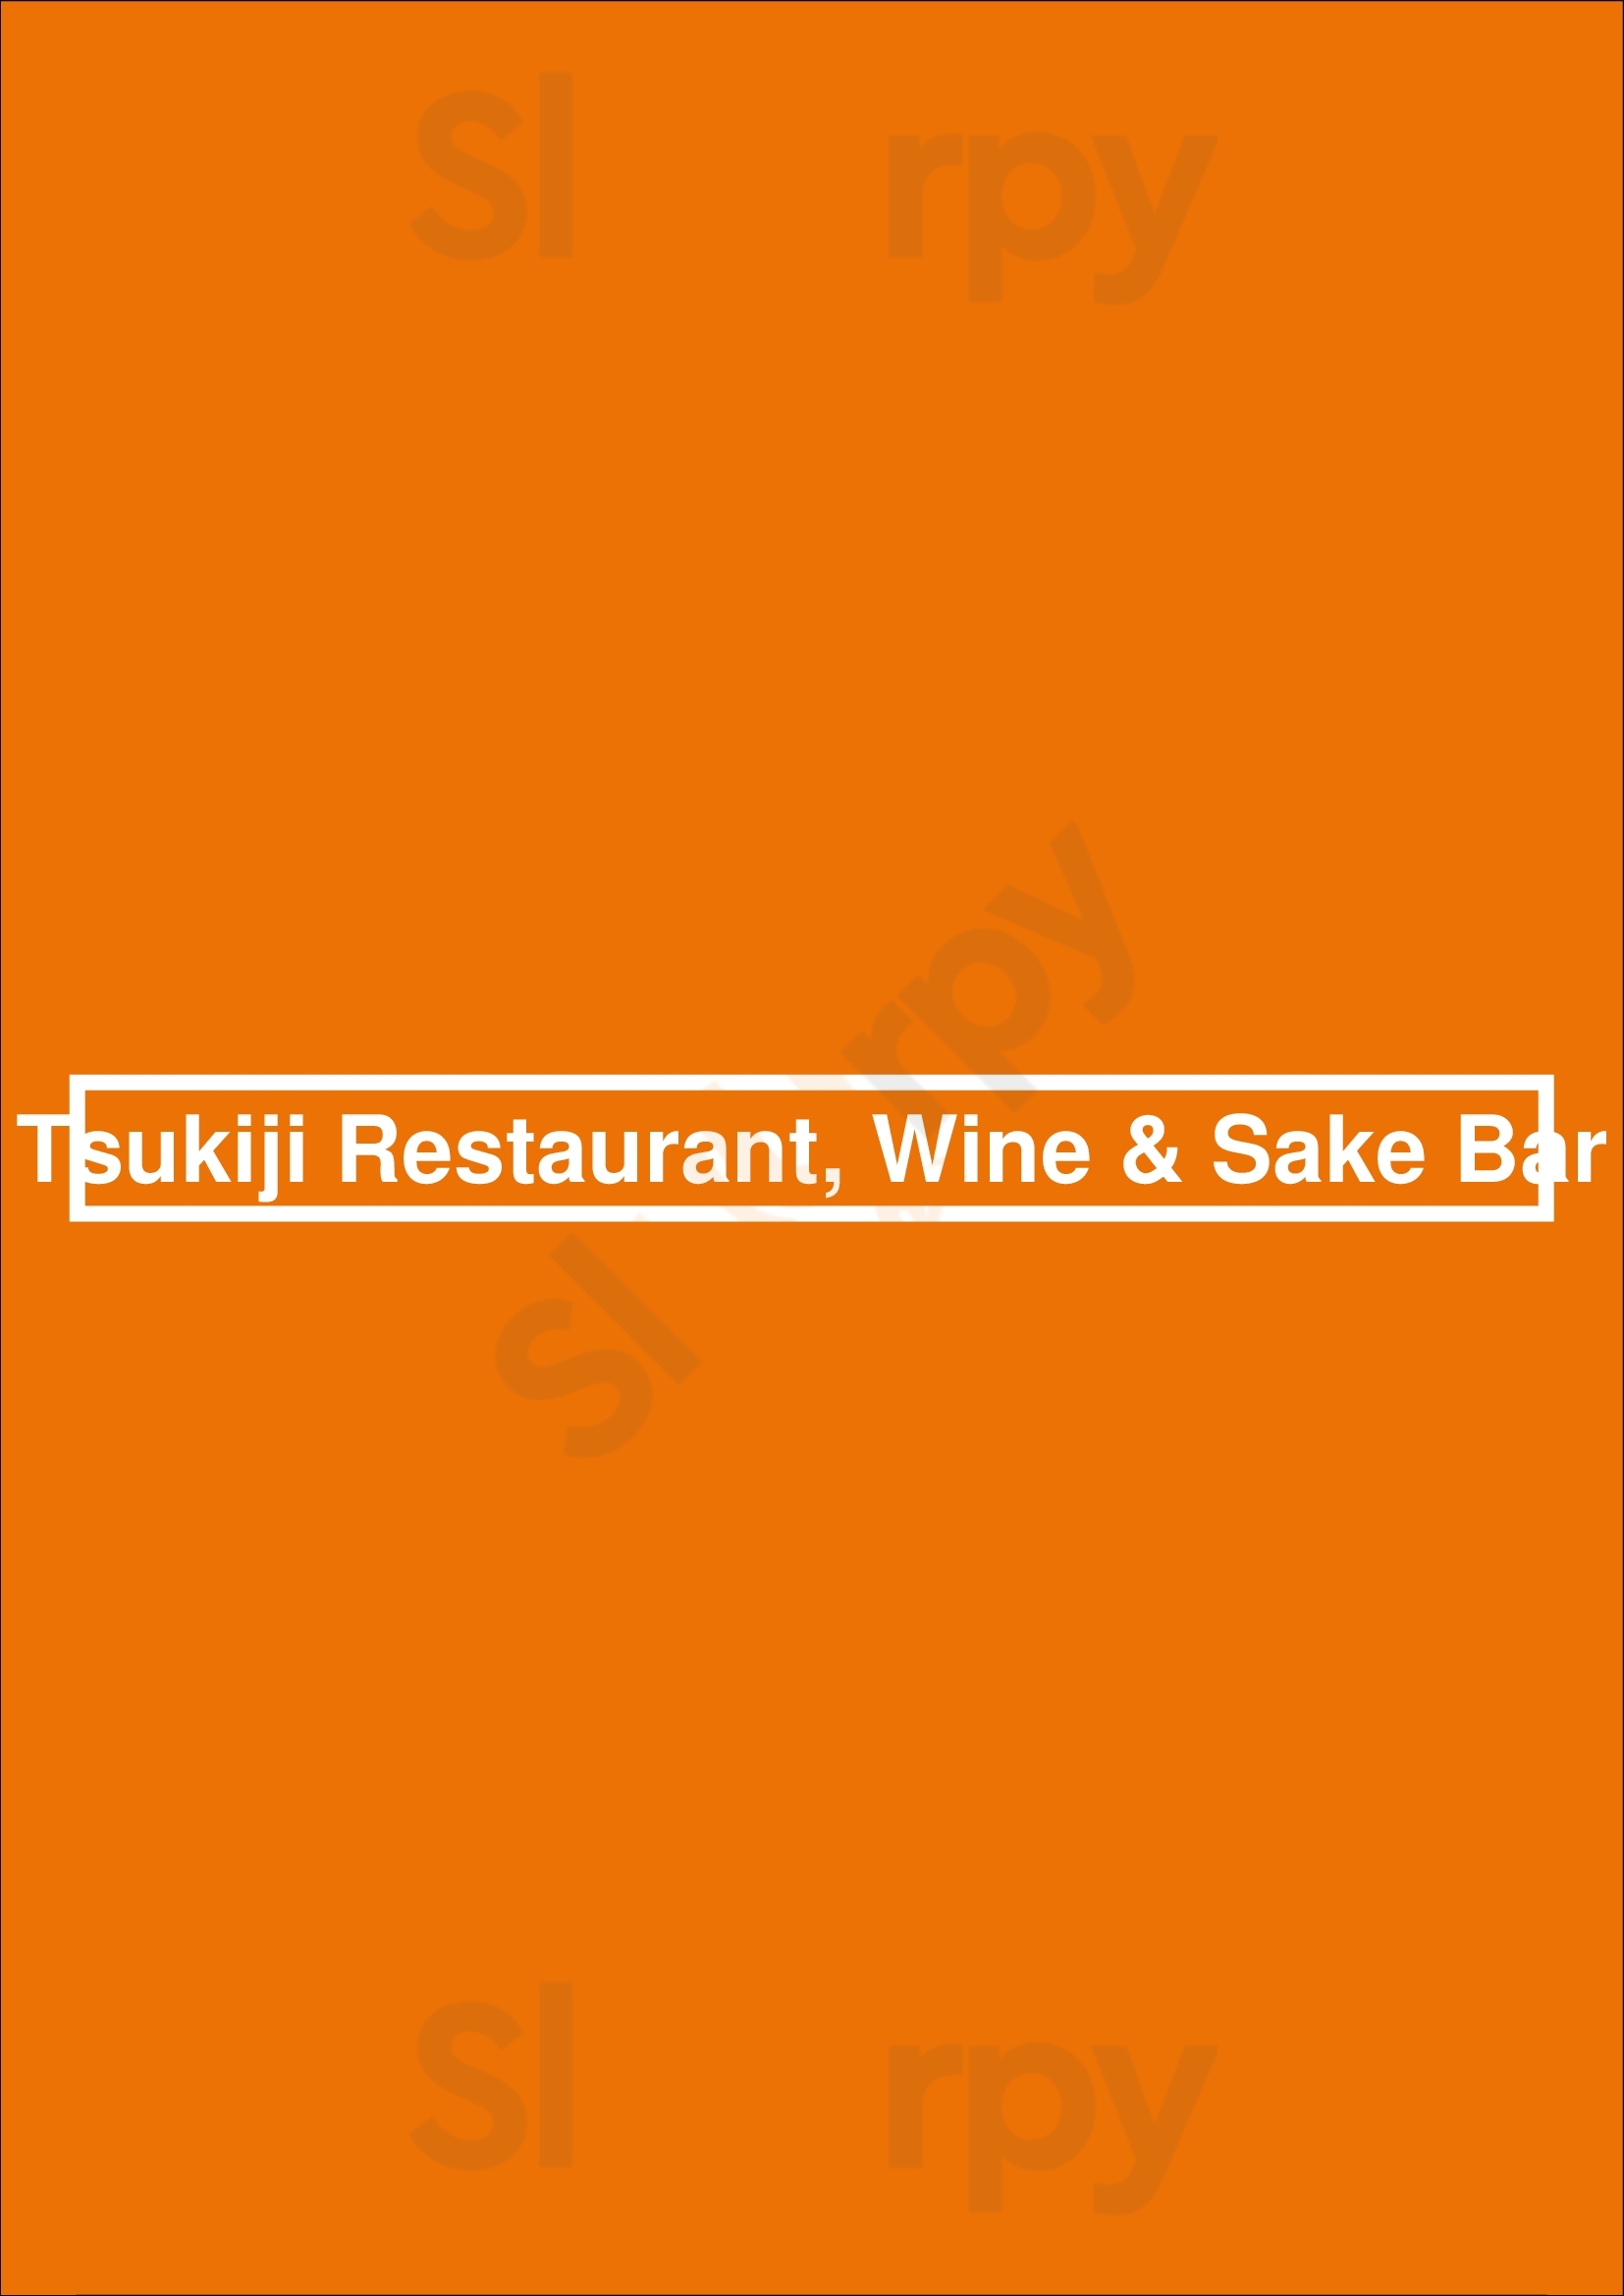 Tsukiji Restaurant, Wine & Sake Bar Lisboa Menu - 1